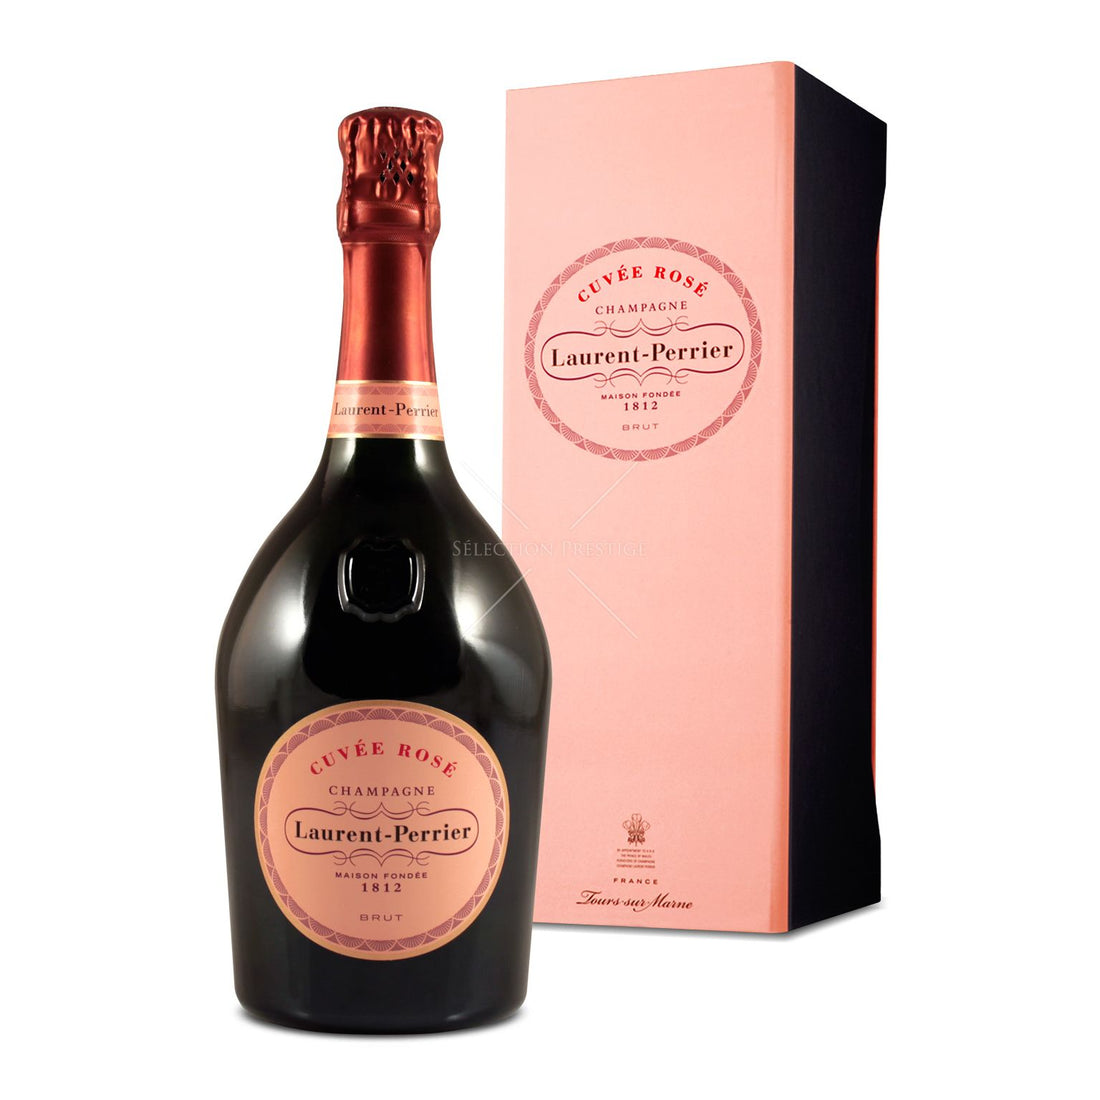 Laurent-Perrier Champagne Cuvee Rose